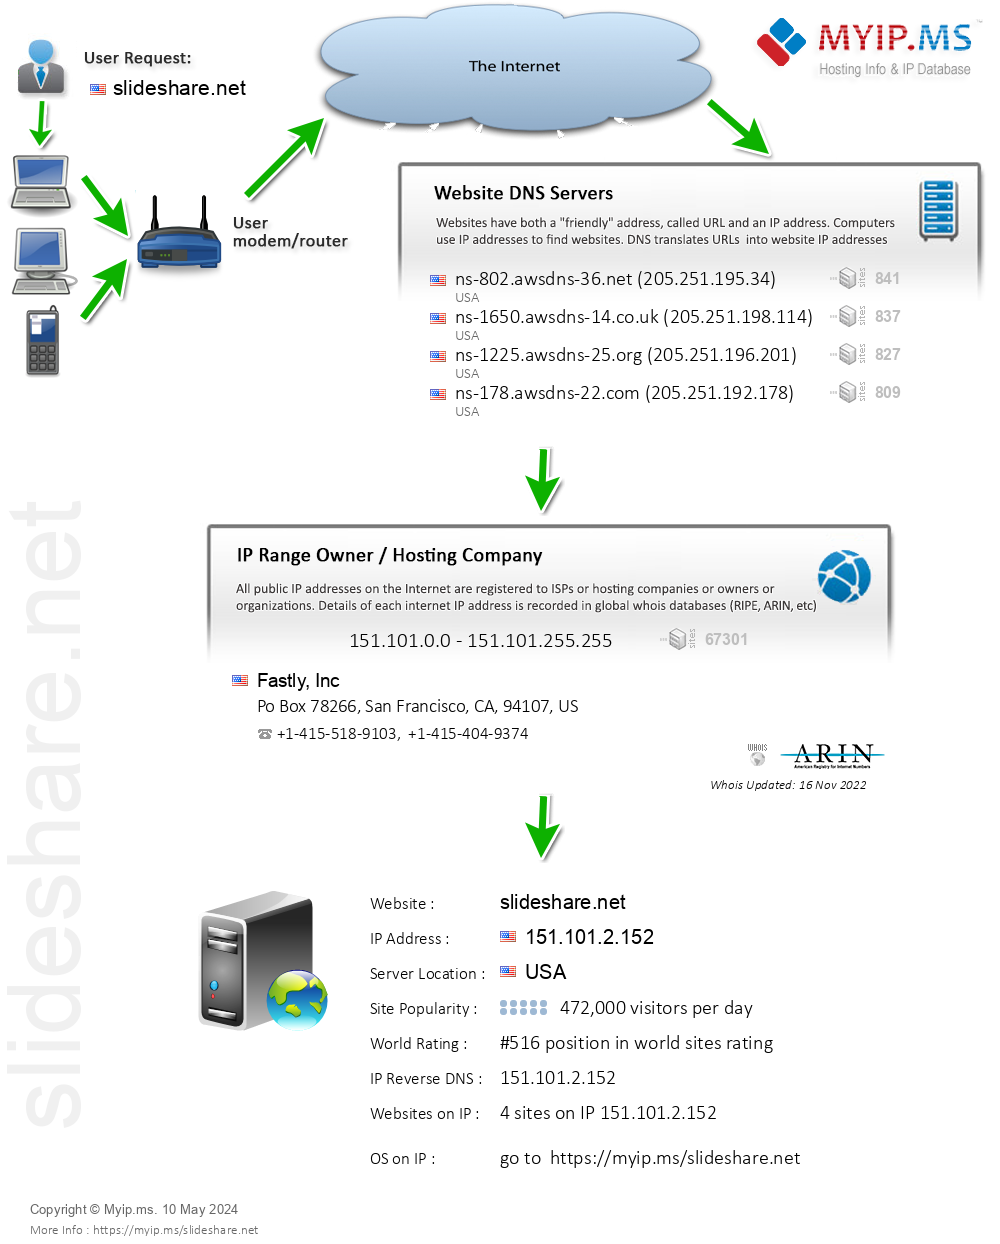 Slideshare.net - Website Hosting Visual IP Diagram